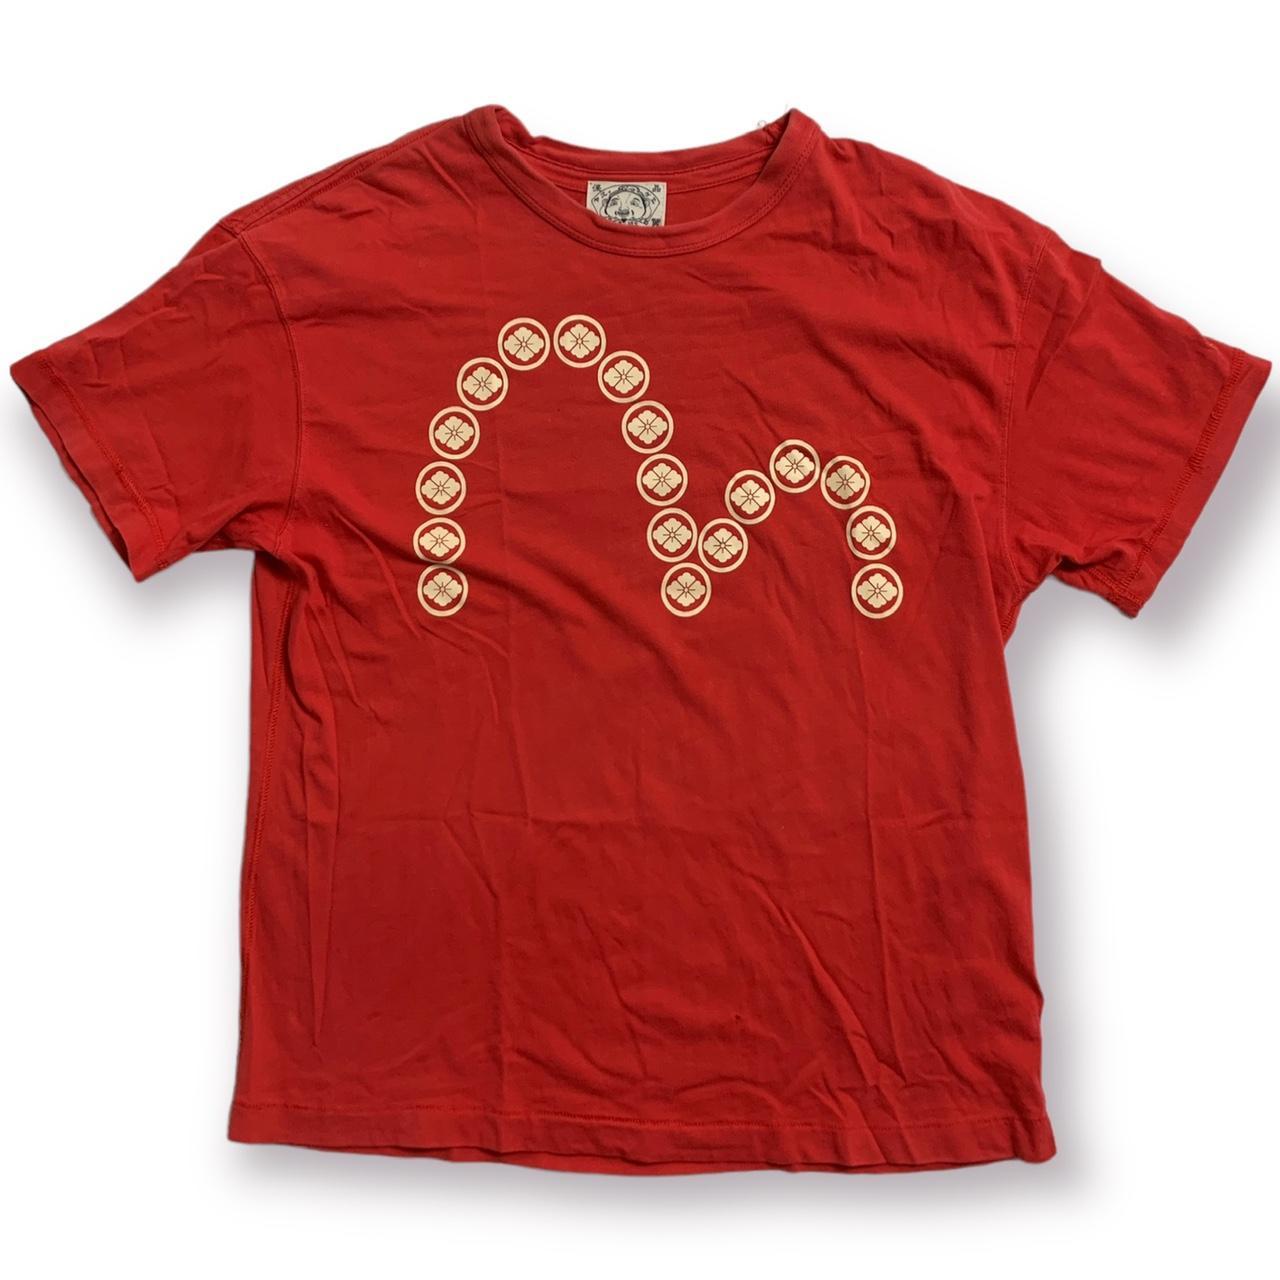 Evisu T-shirt (M)